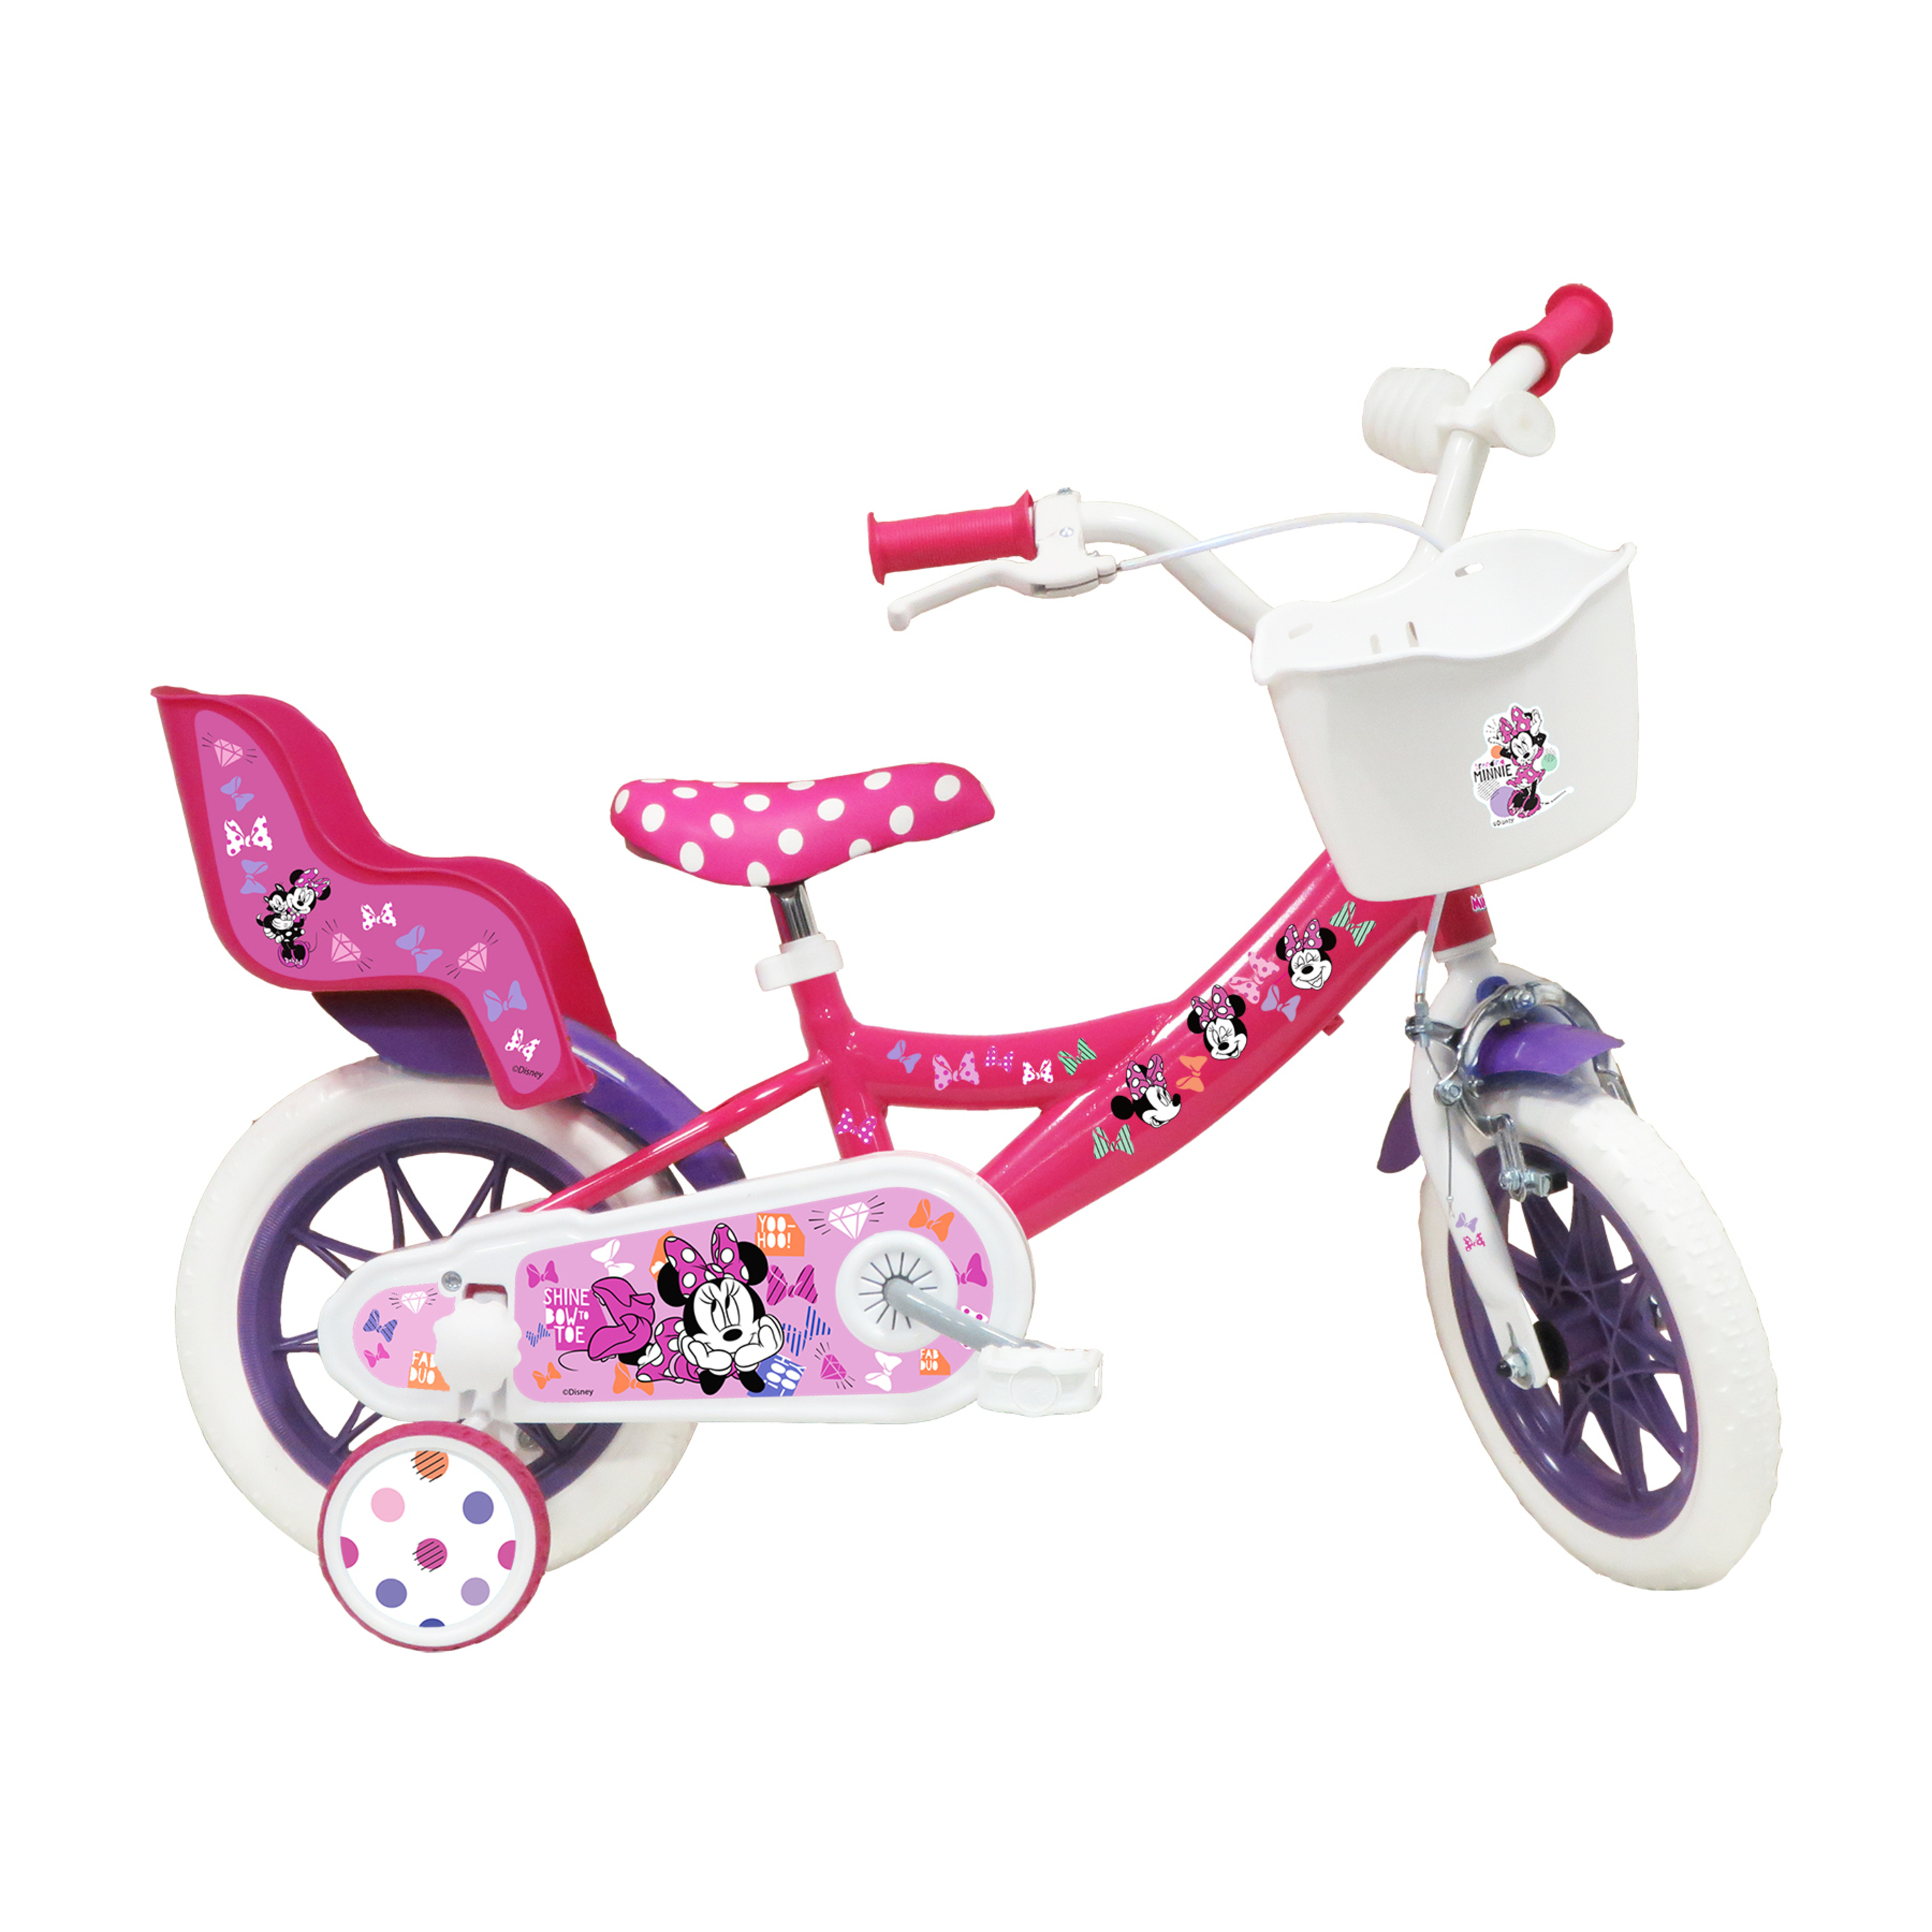 Bicicleta Niña 12 Pulgadas Minnie Mouse 3-5 Años - rosa - 